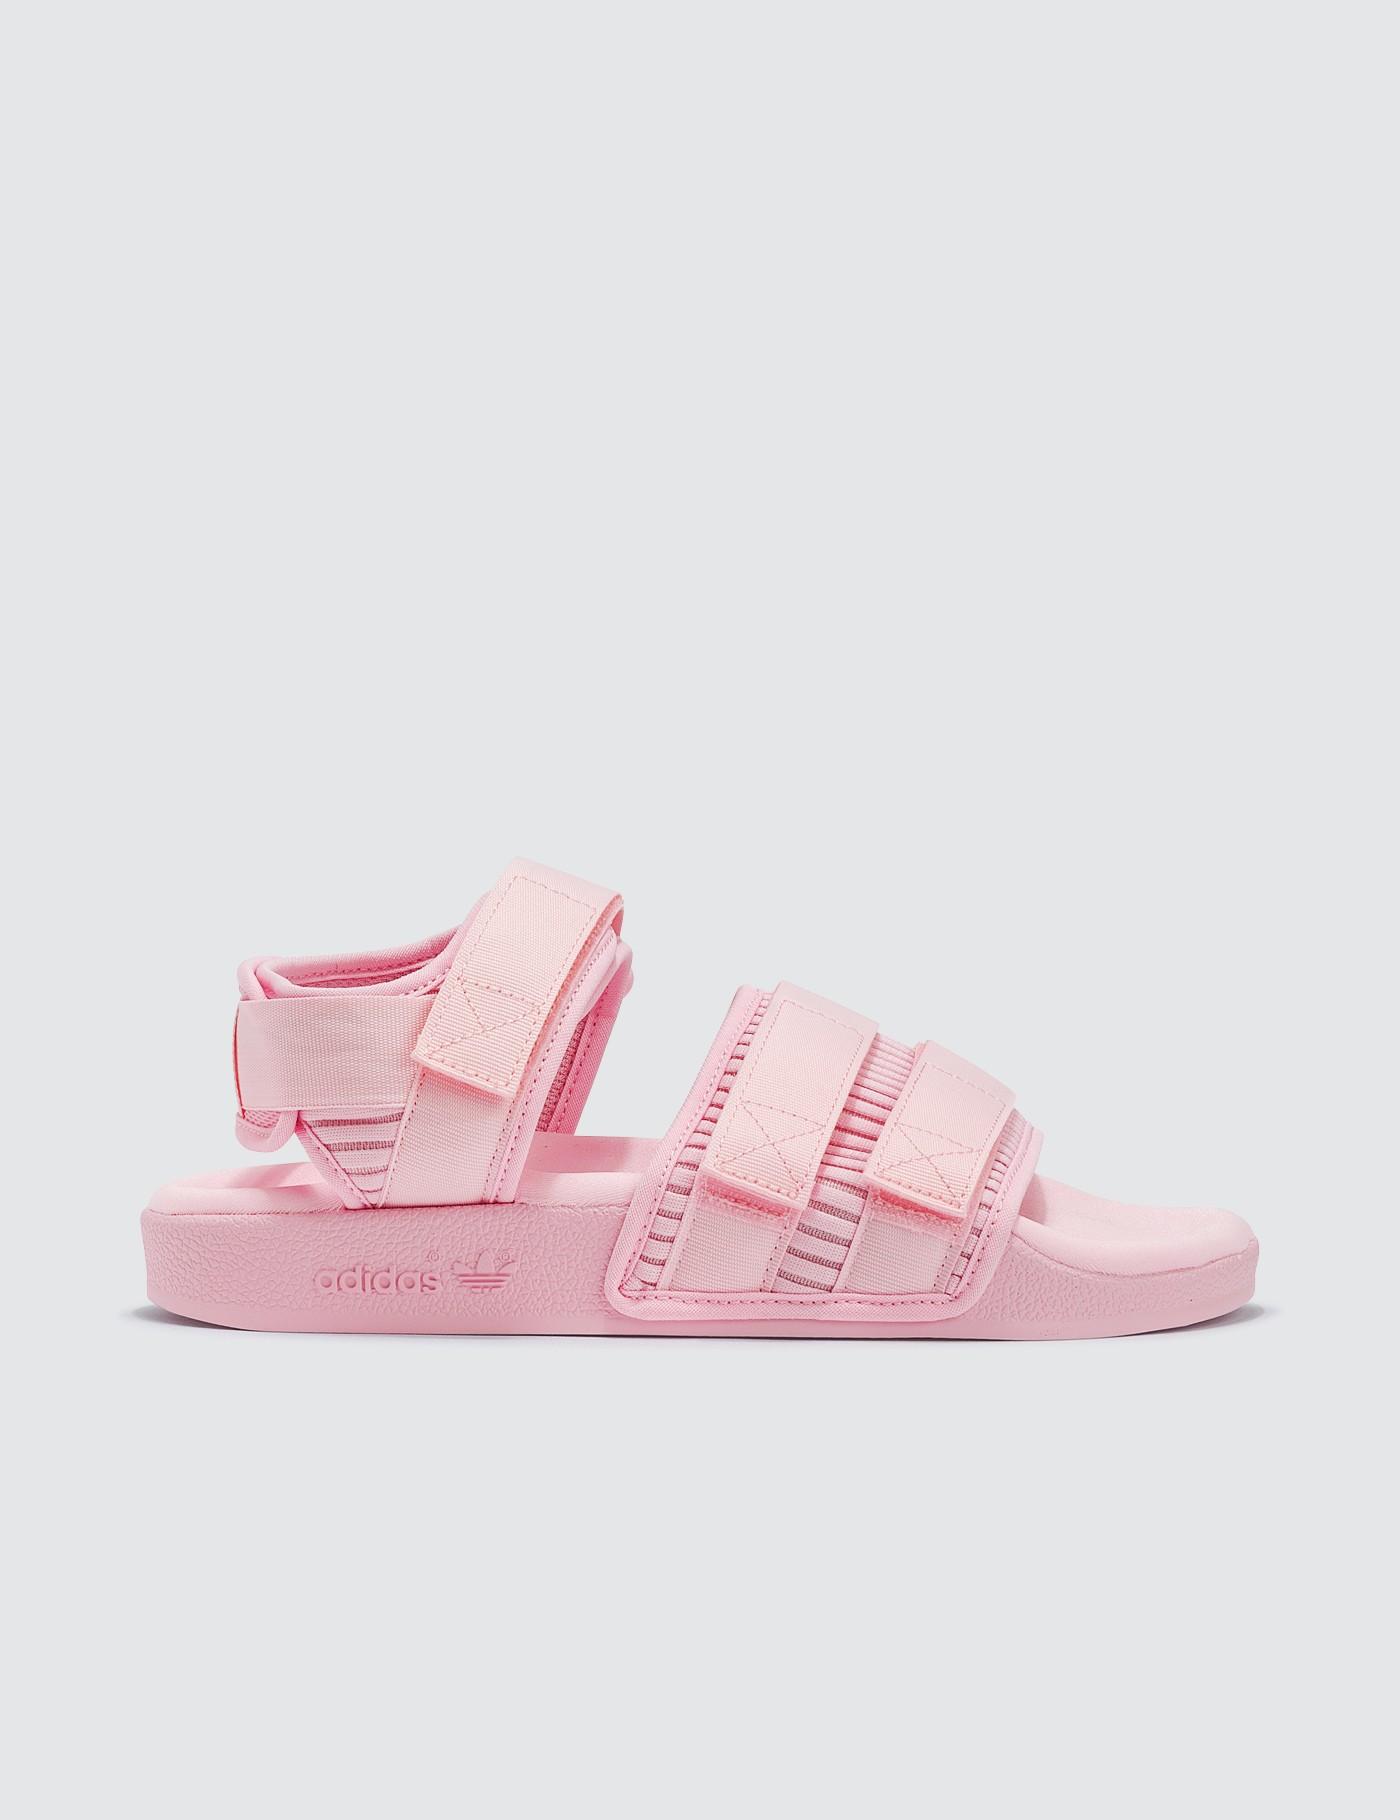  adidas  Originals Adilette Sandal  2 0 W in Pink  Lyst